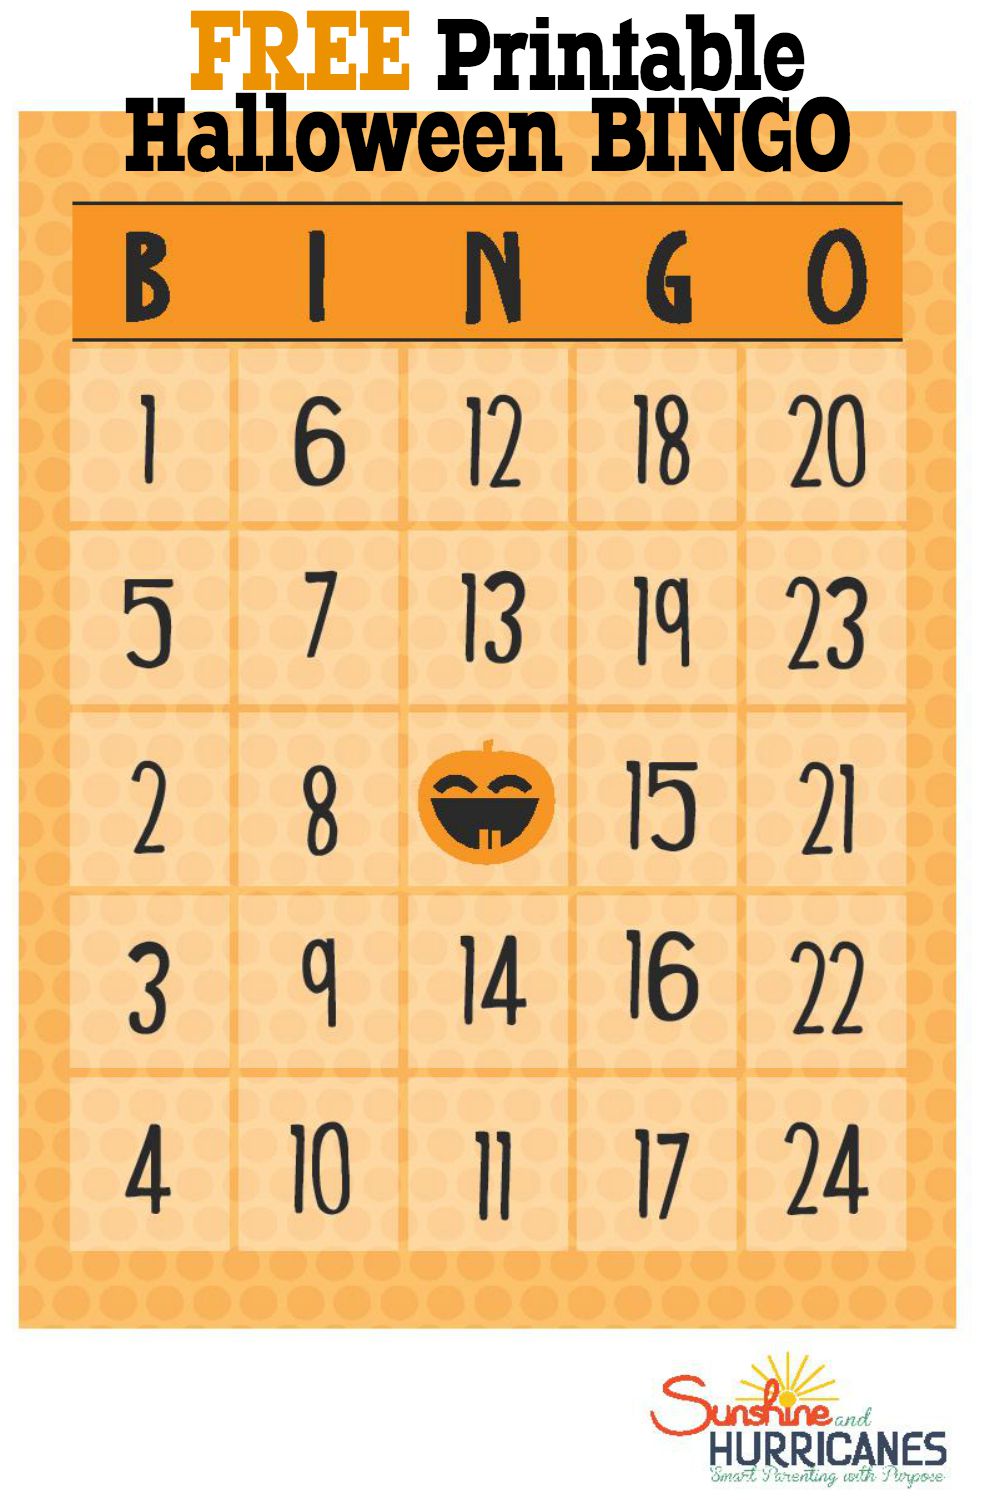 Free online bingo